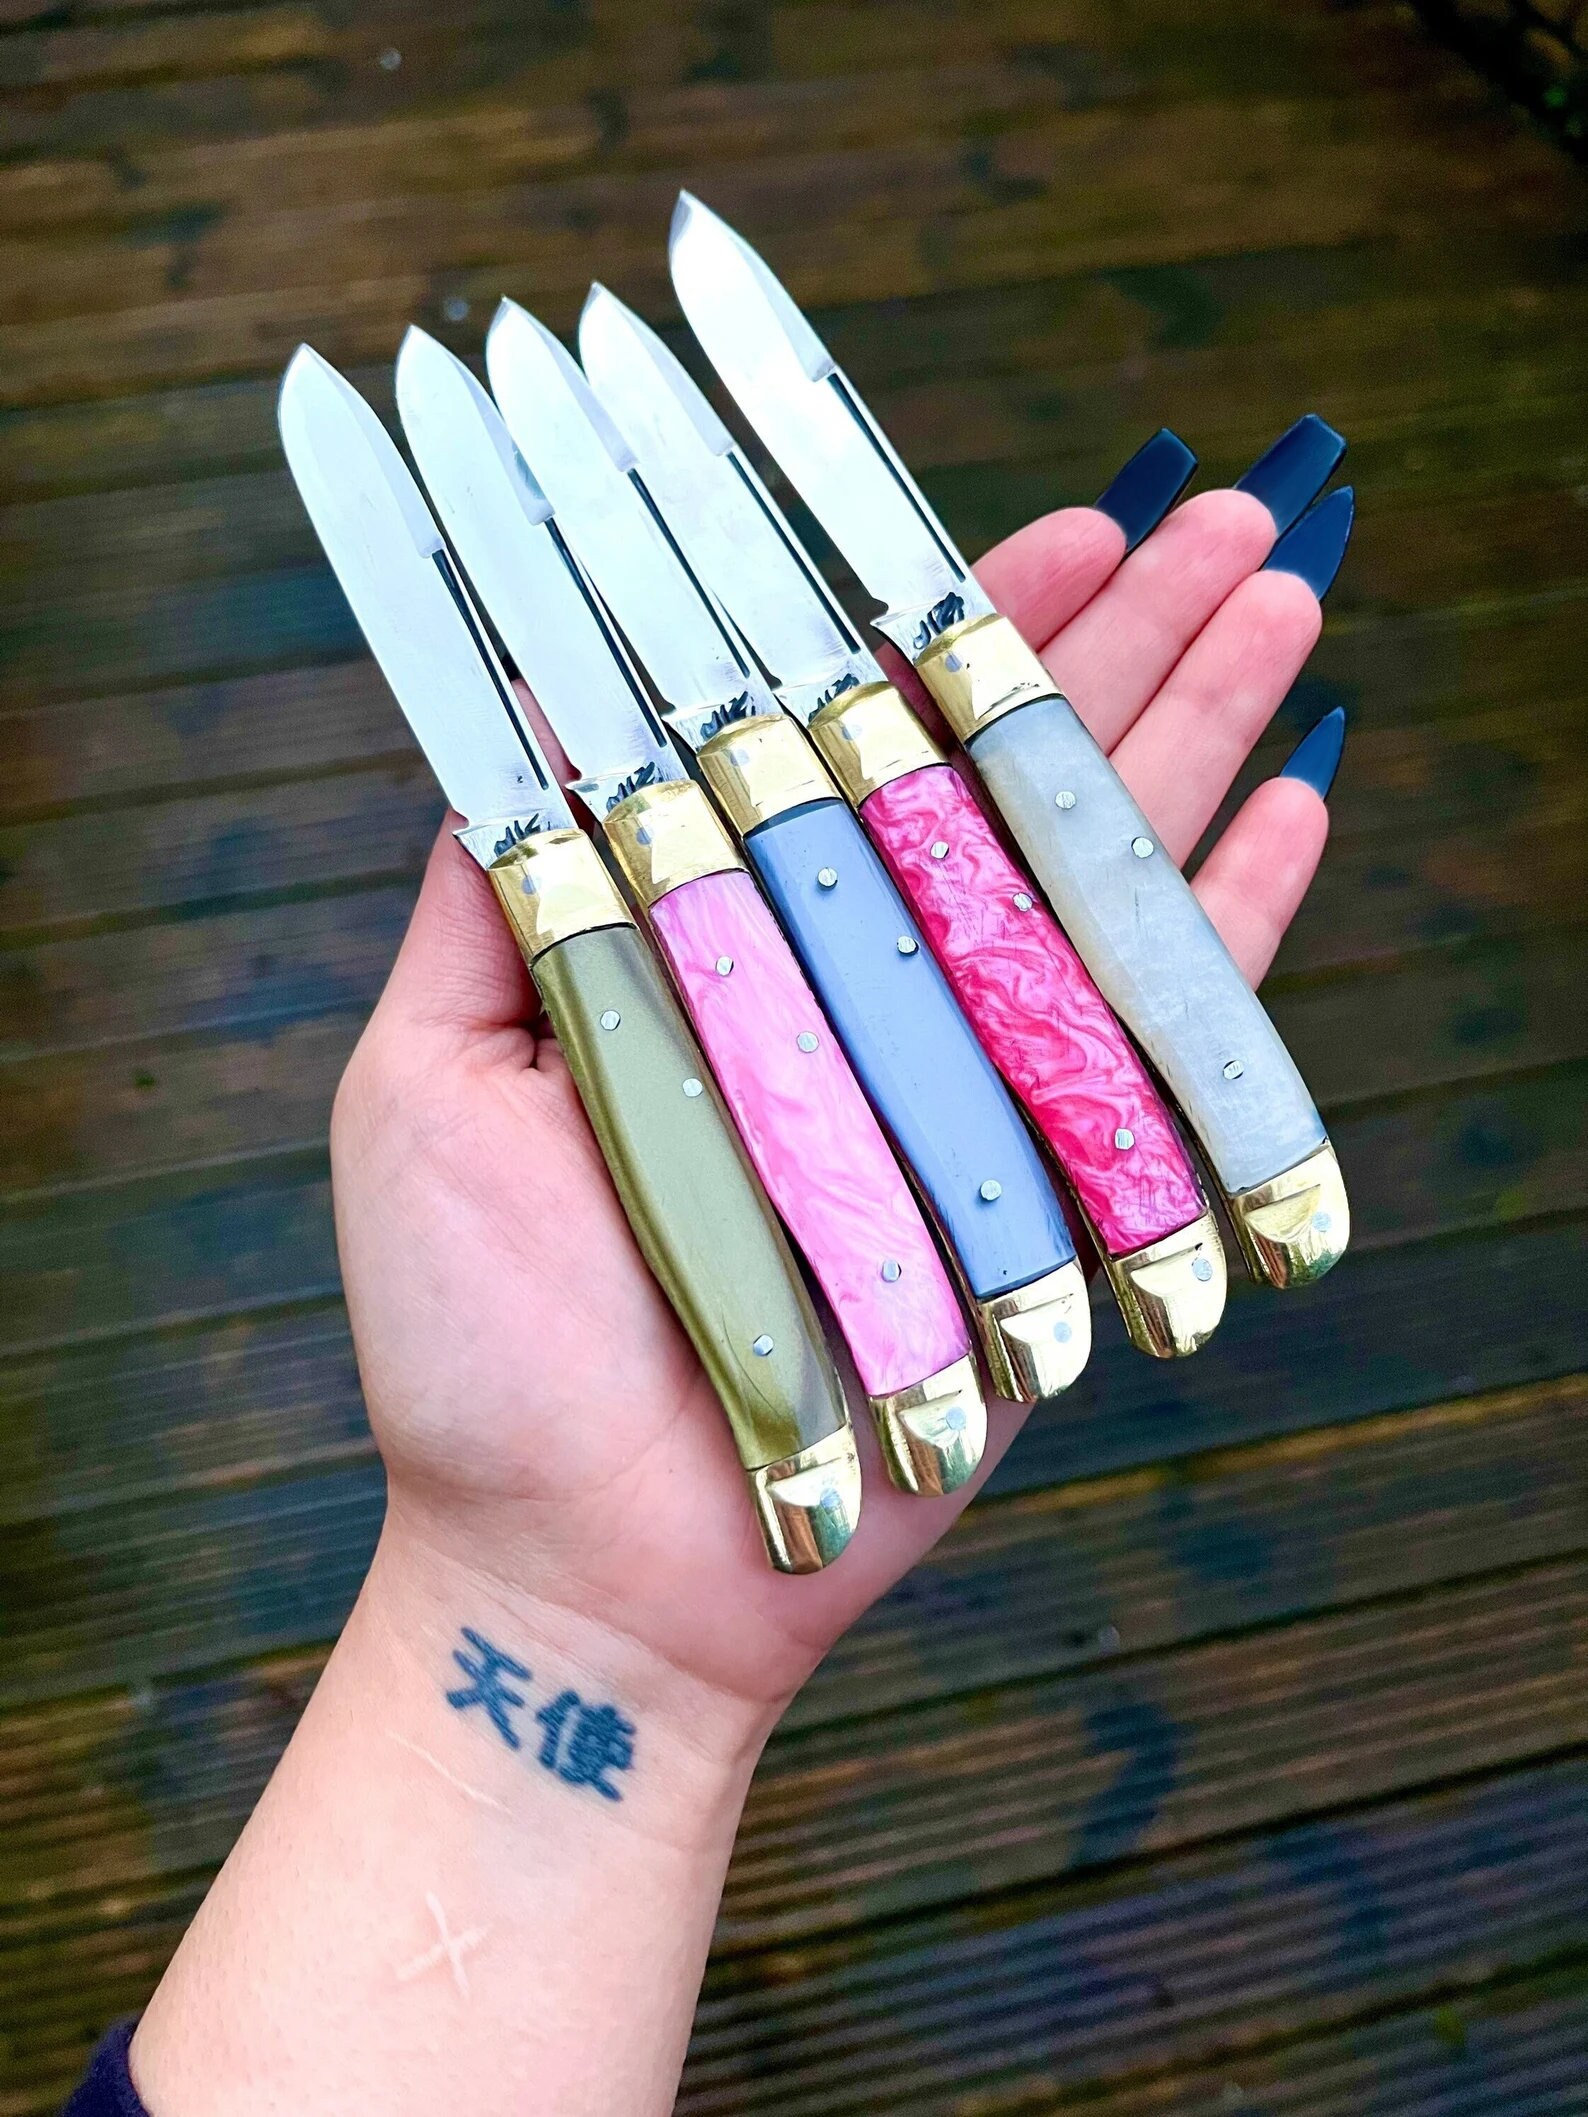 Pocket Knife, Mini Knife, Pink Knife 